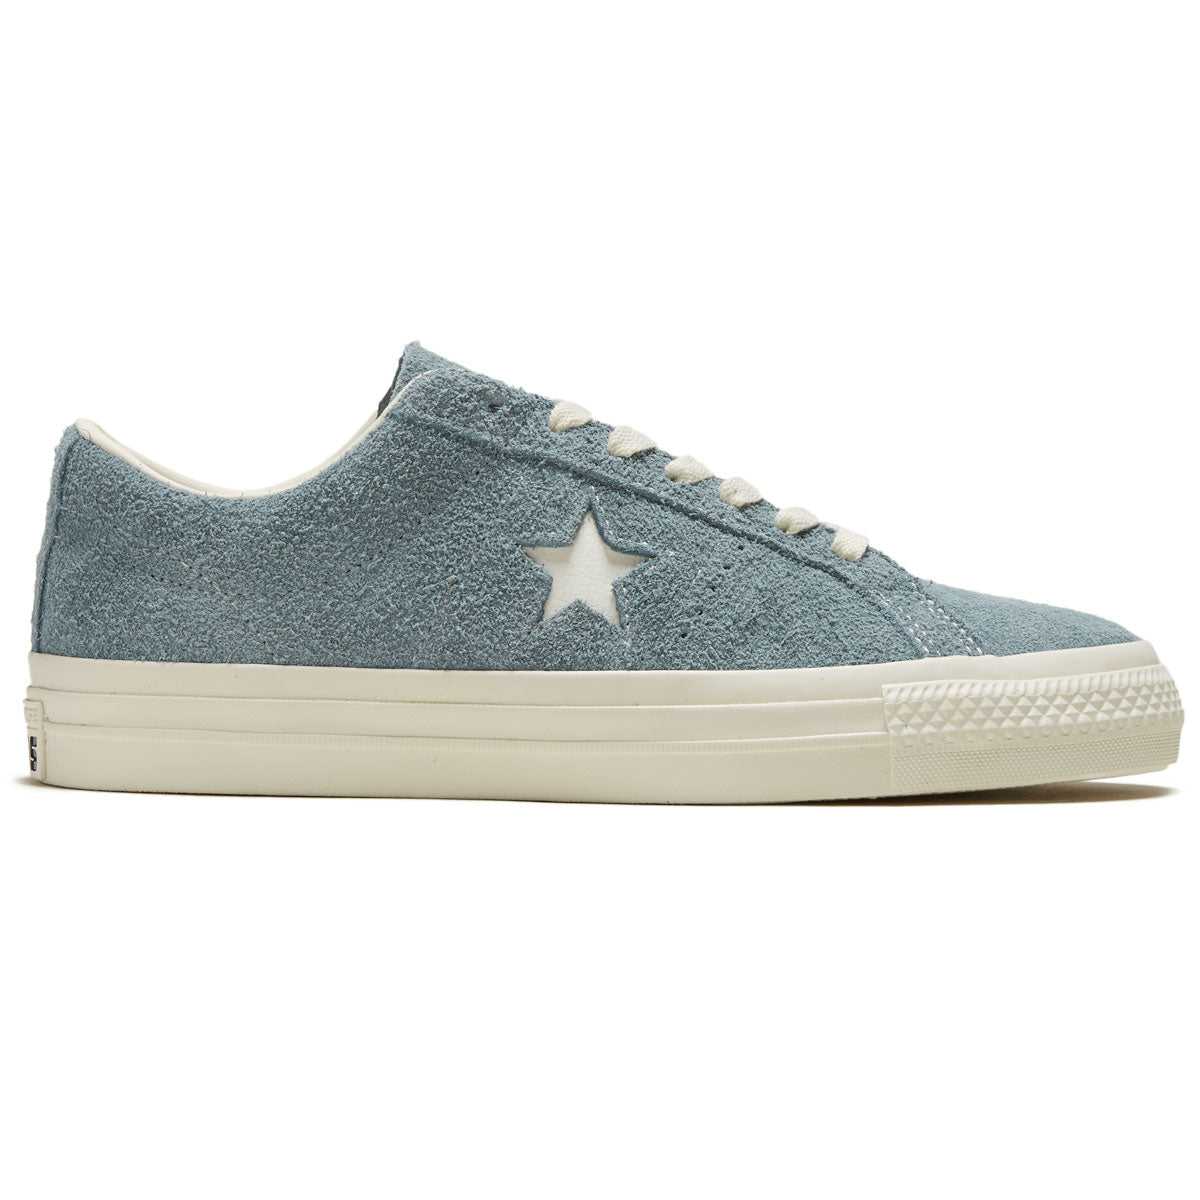 Converse One Star Pro Shoes - Cocoon Blue/Egret/Egret image 1